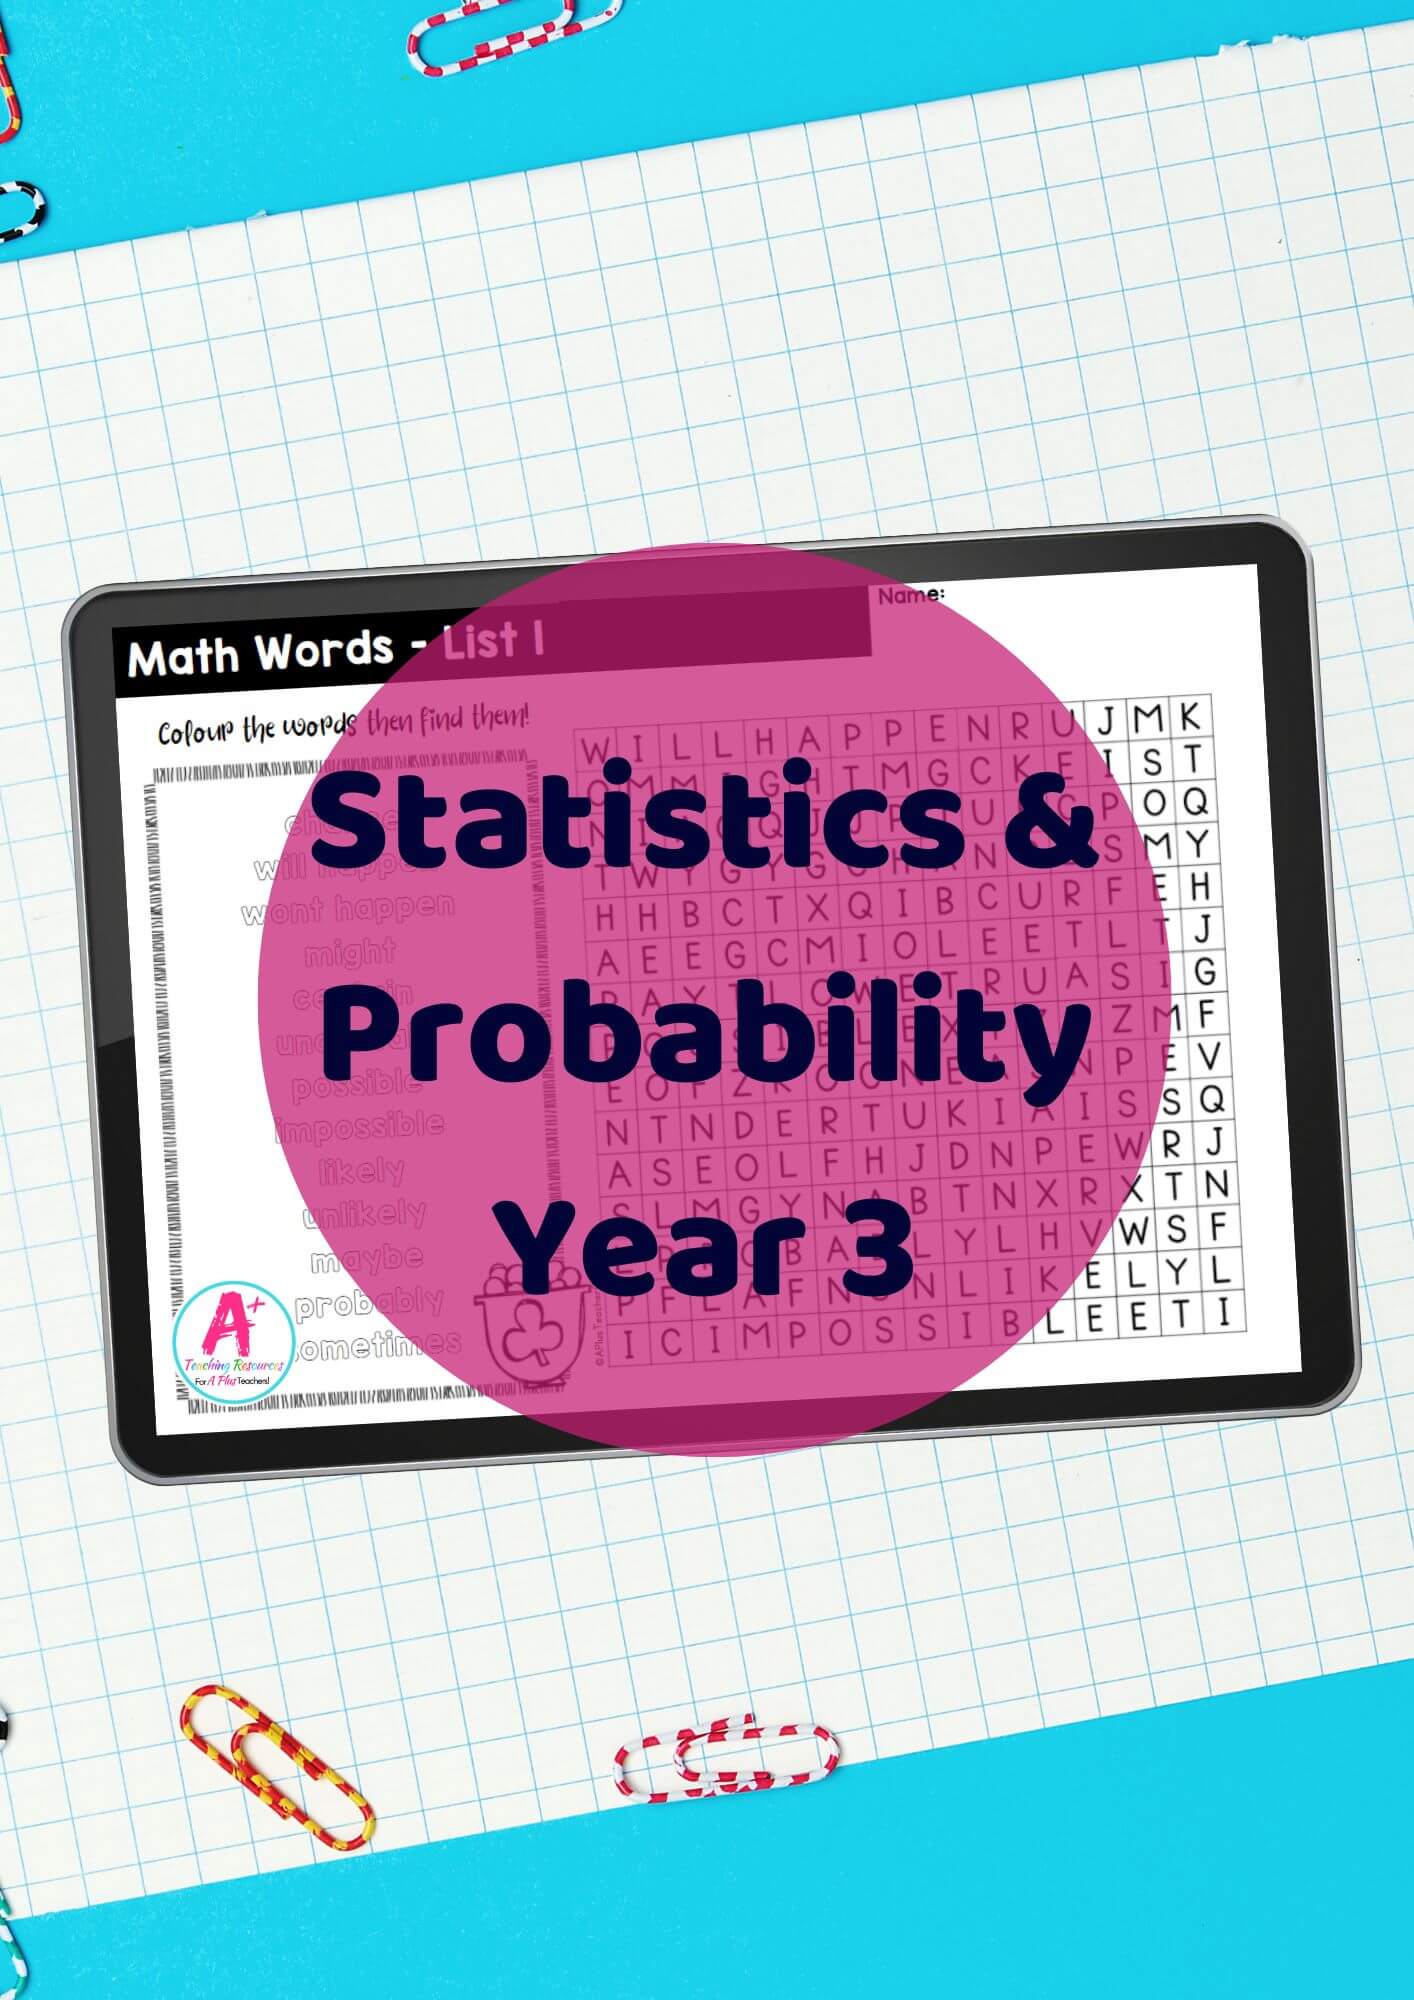 Statistics & Probability POWERPOINT - Year 3